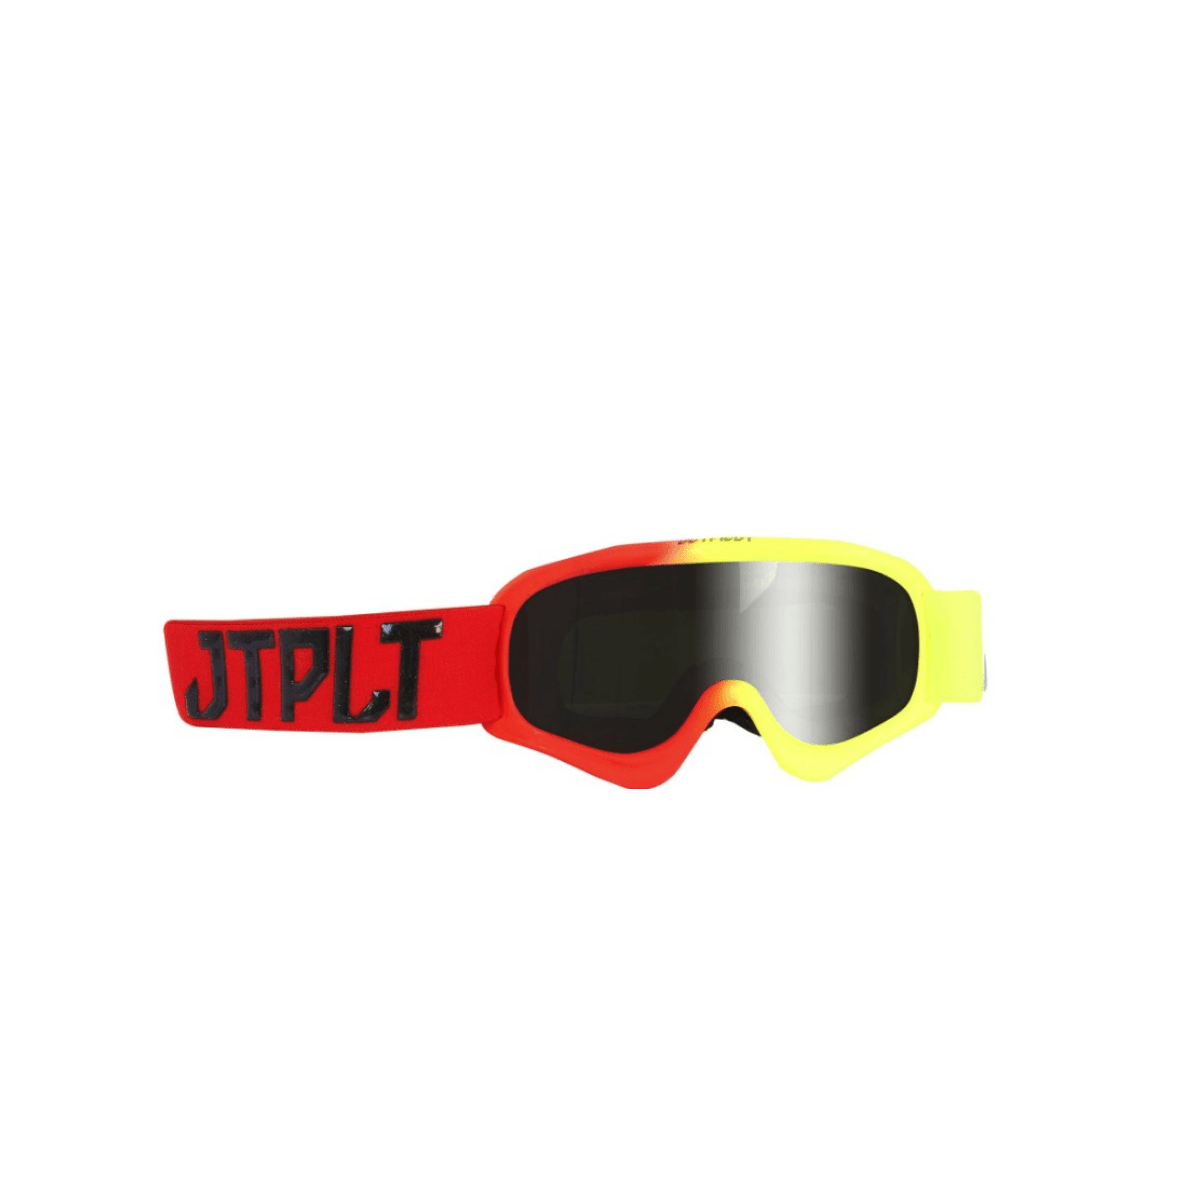 Jetpilot RX Youth Race Goggle